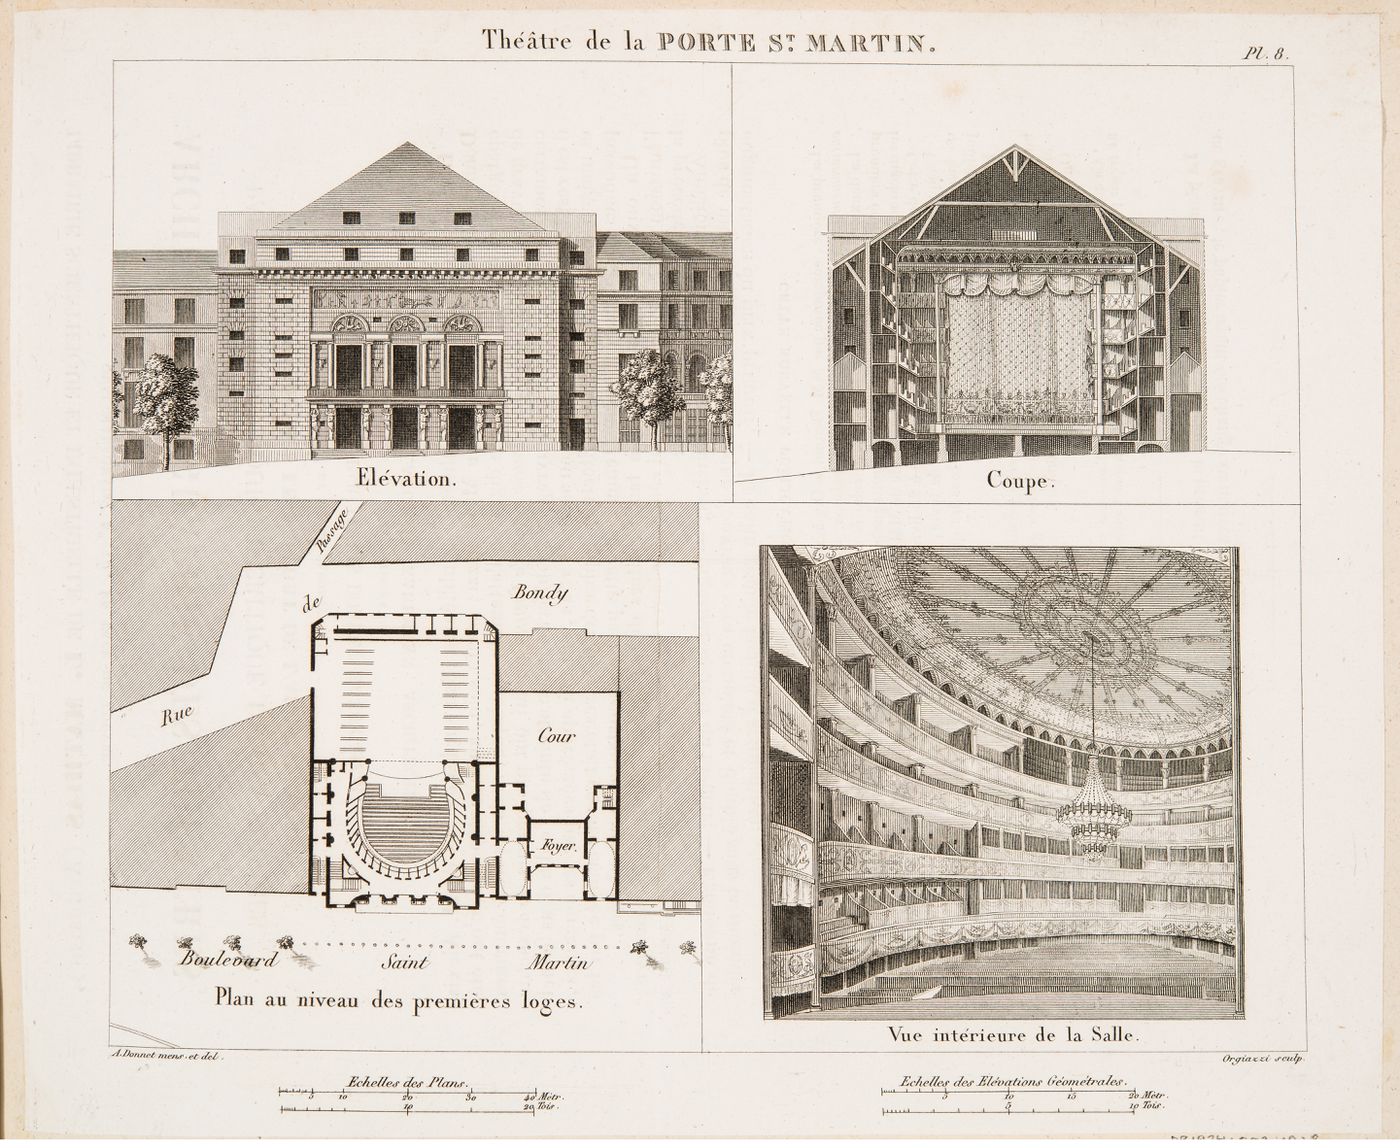 Théâtre de la Porte Saint-Martin, Paris: Elevation, cross section, plan of the level of the first boxes and interior perspective